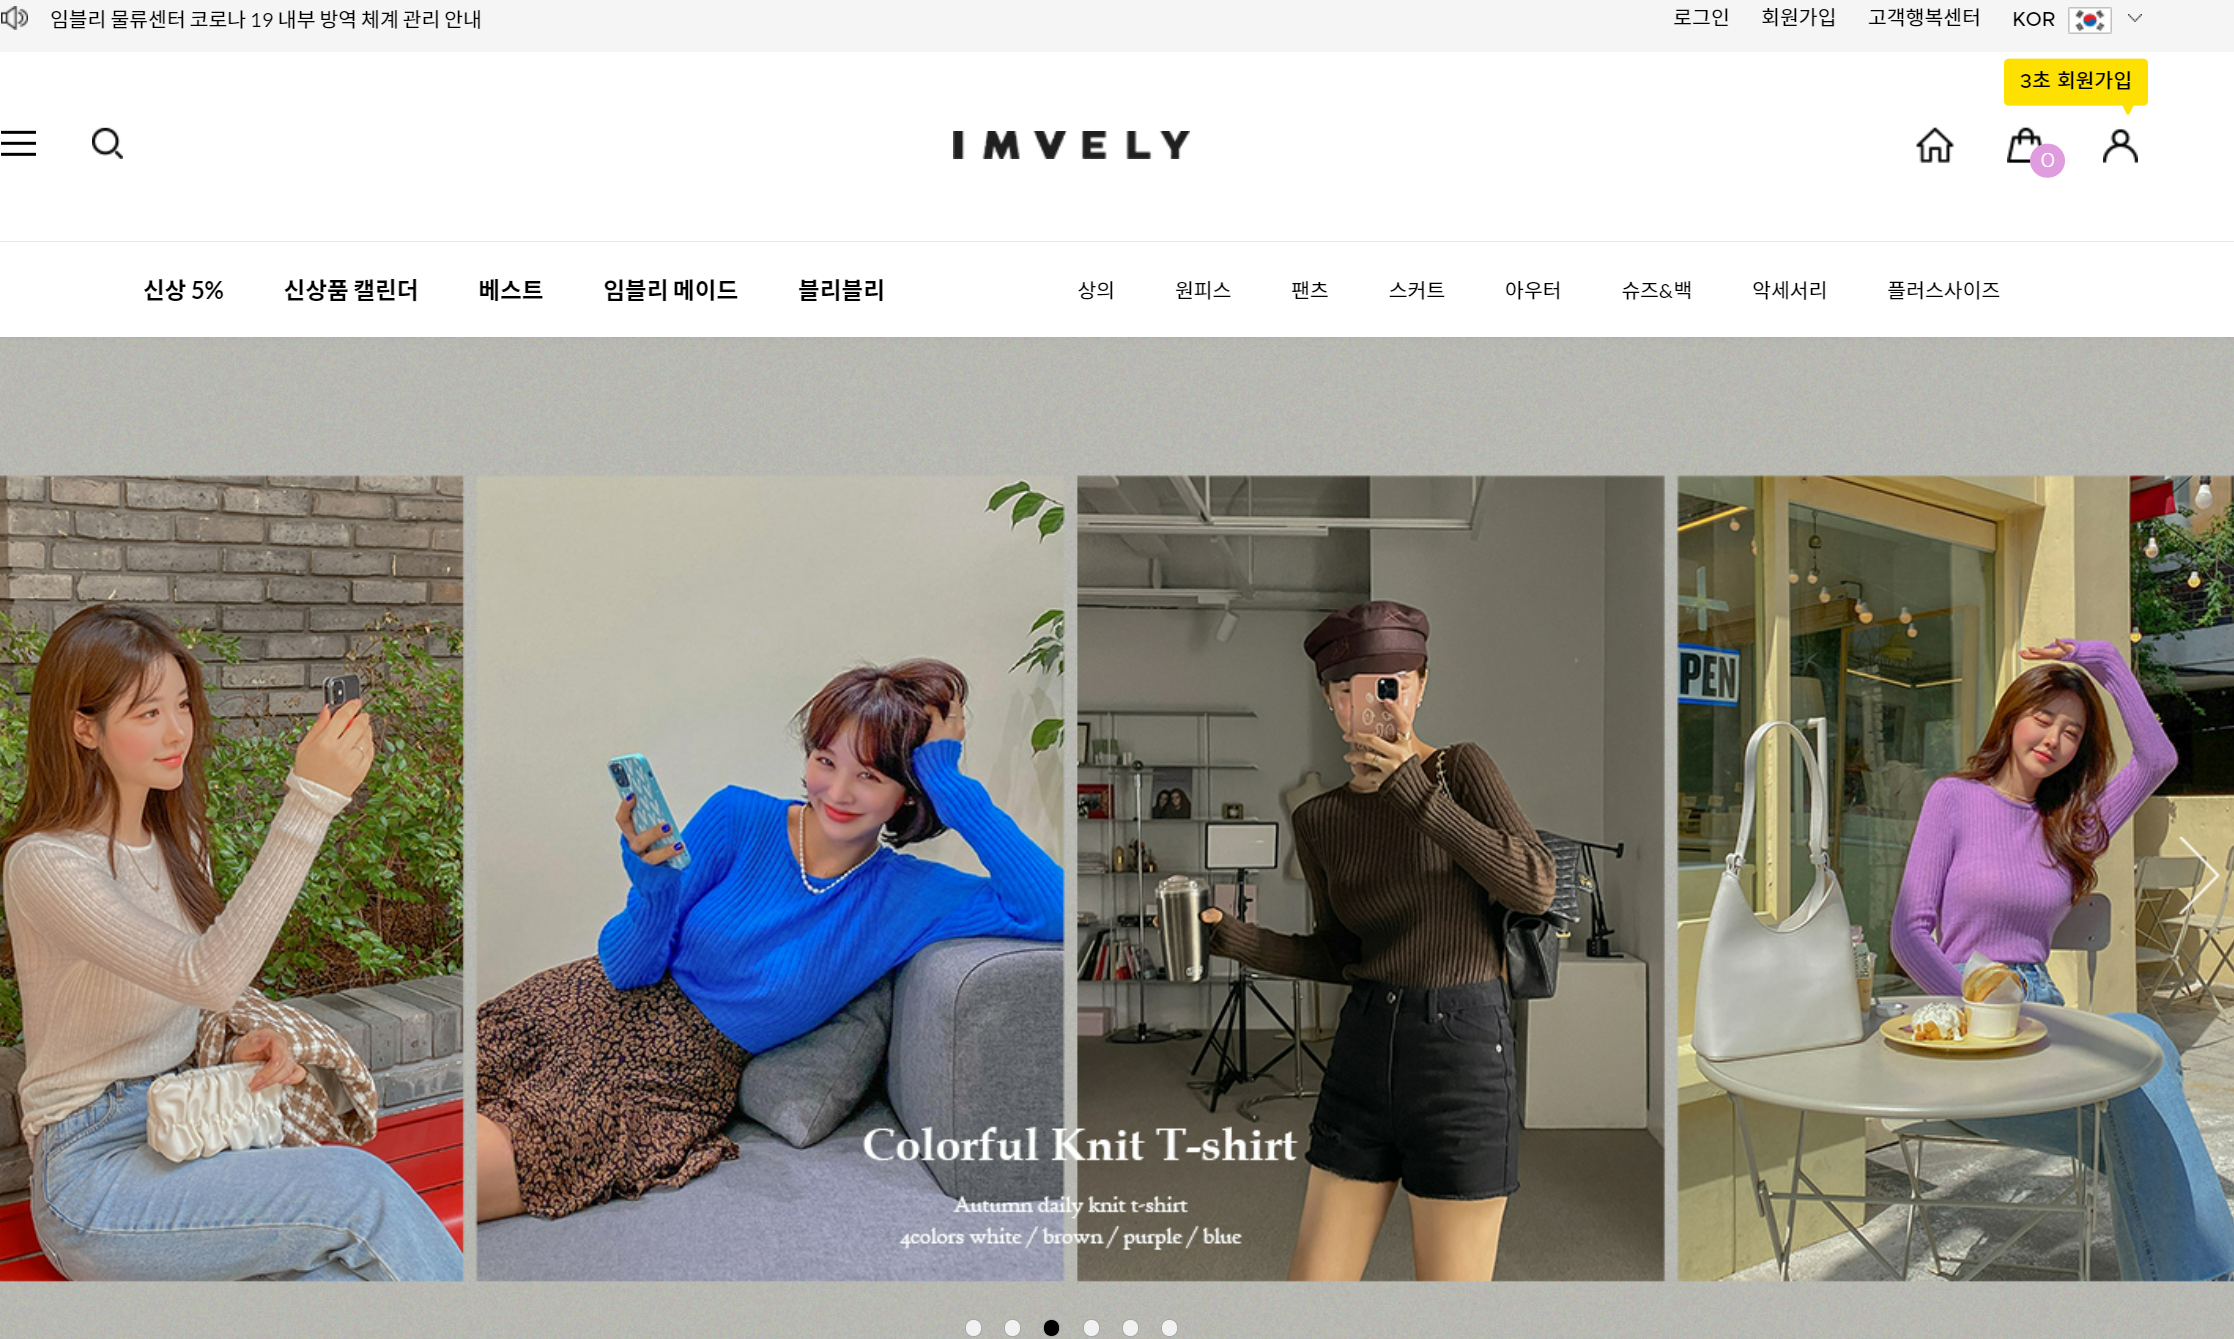 imvely - korea women fashion shop